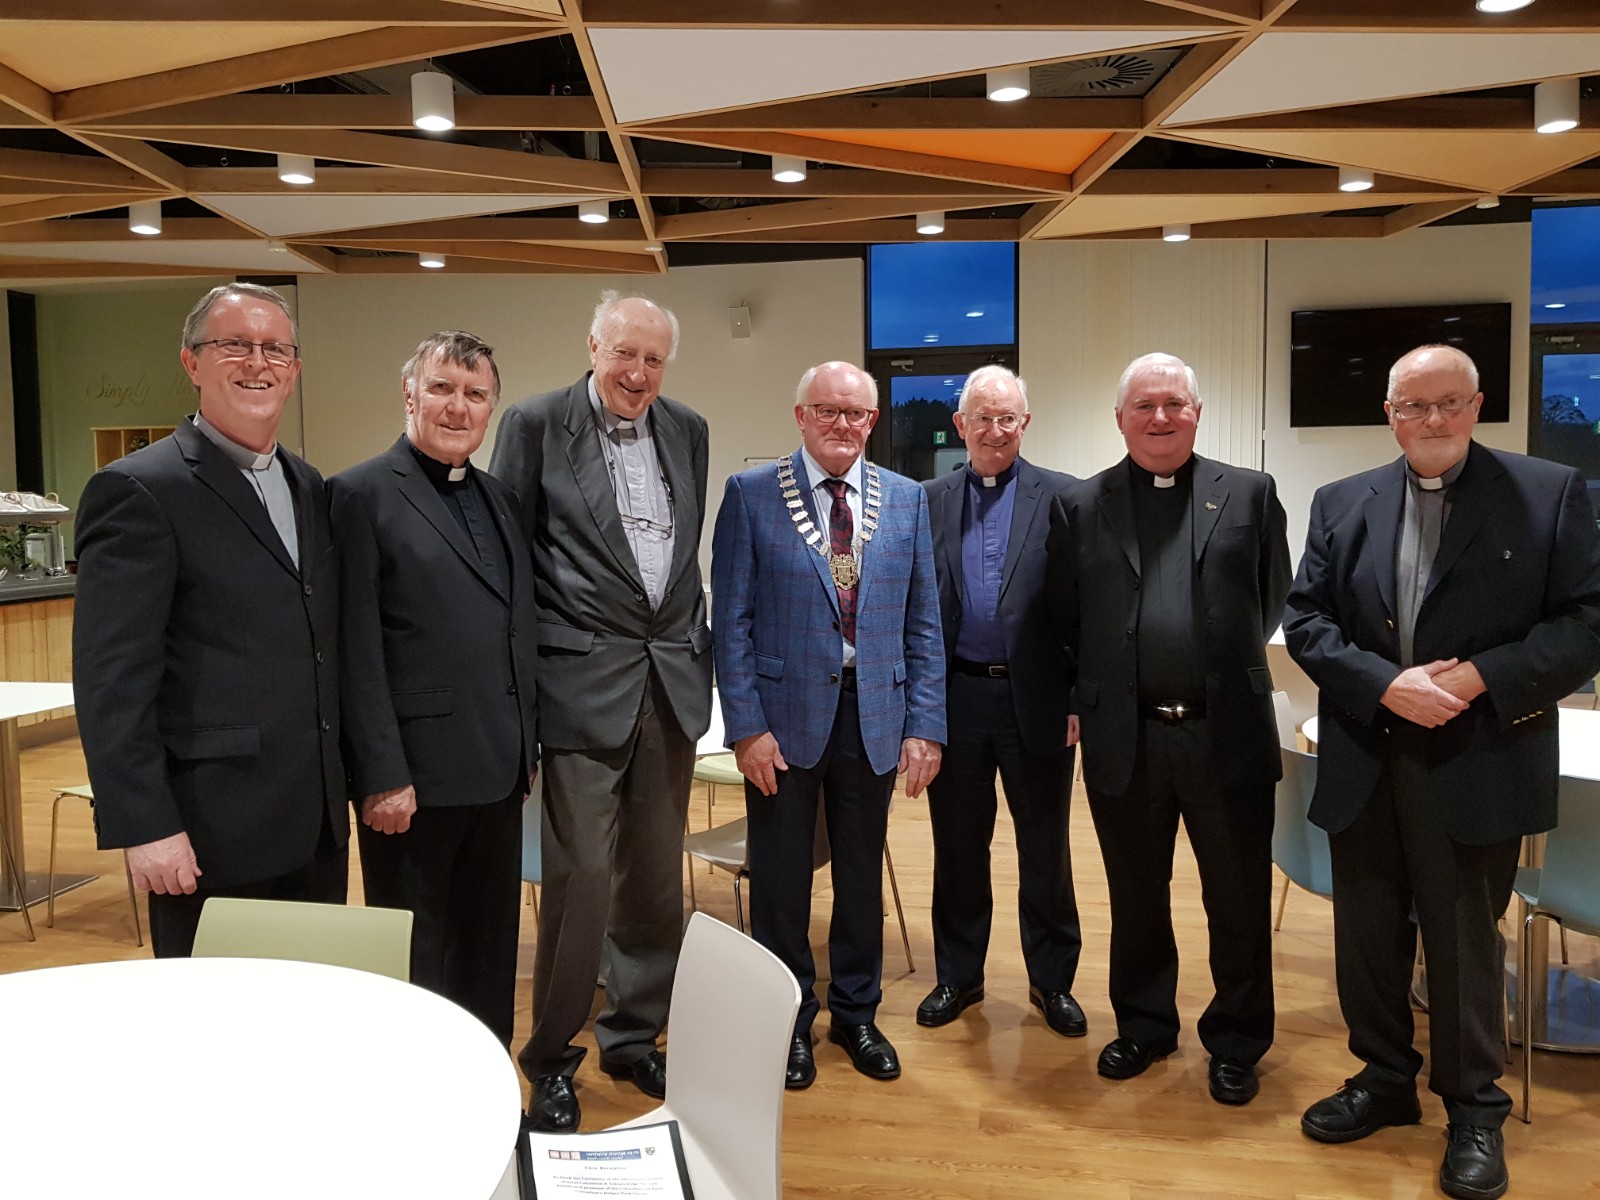 Navan Civic Reception honours contribution of Columbans